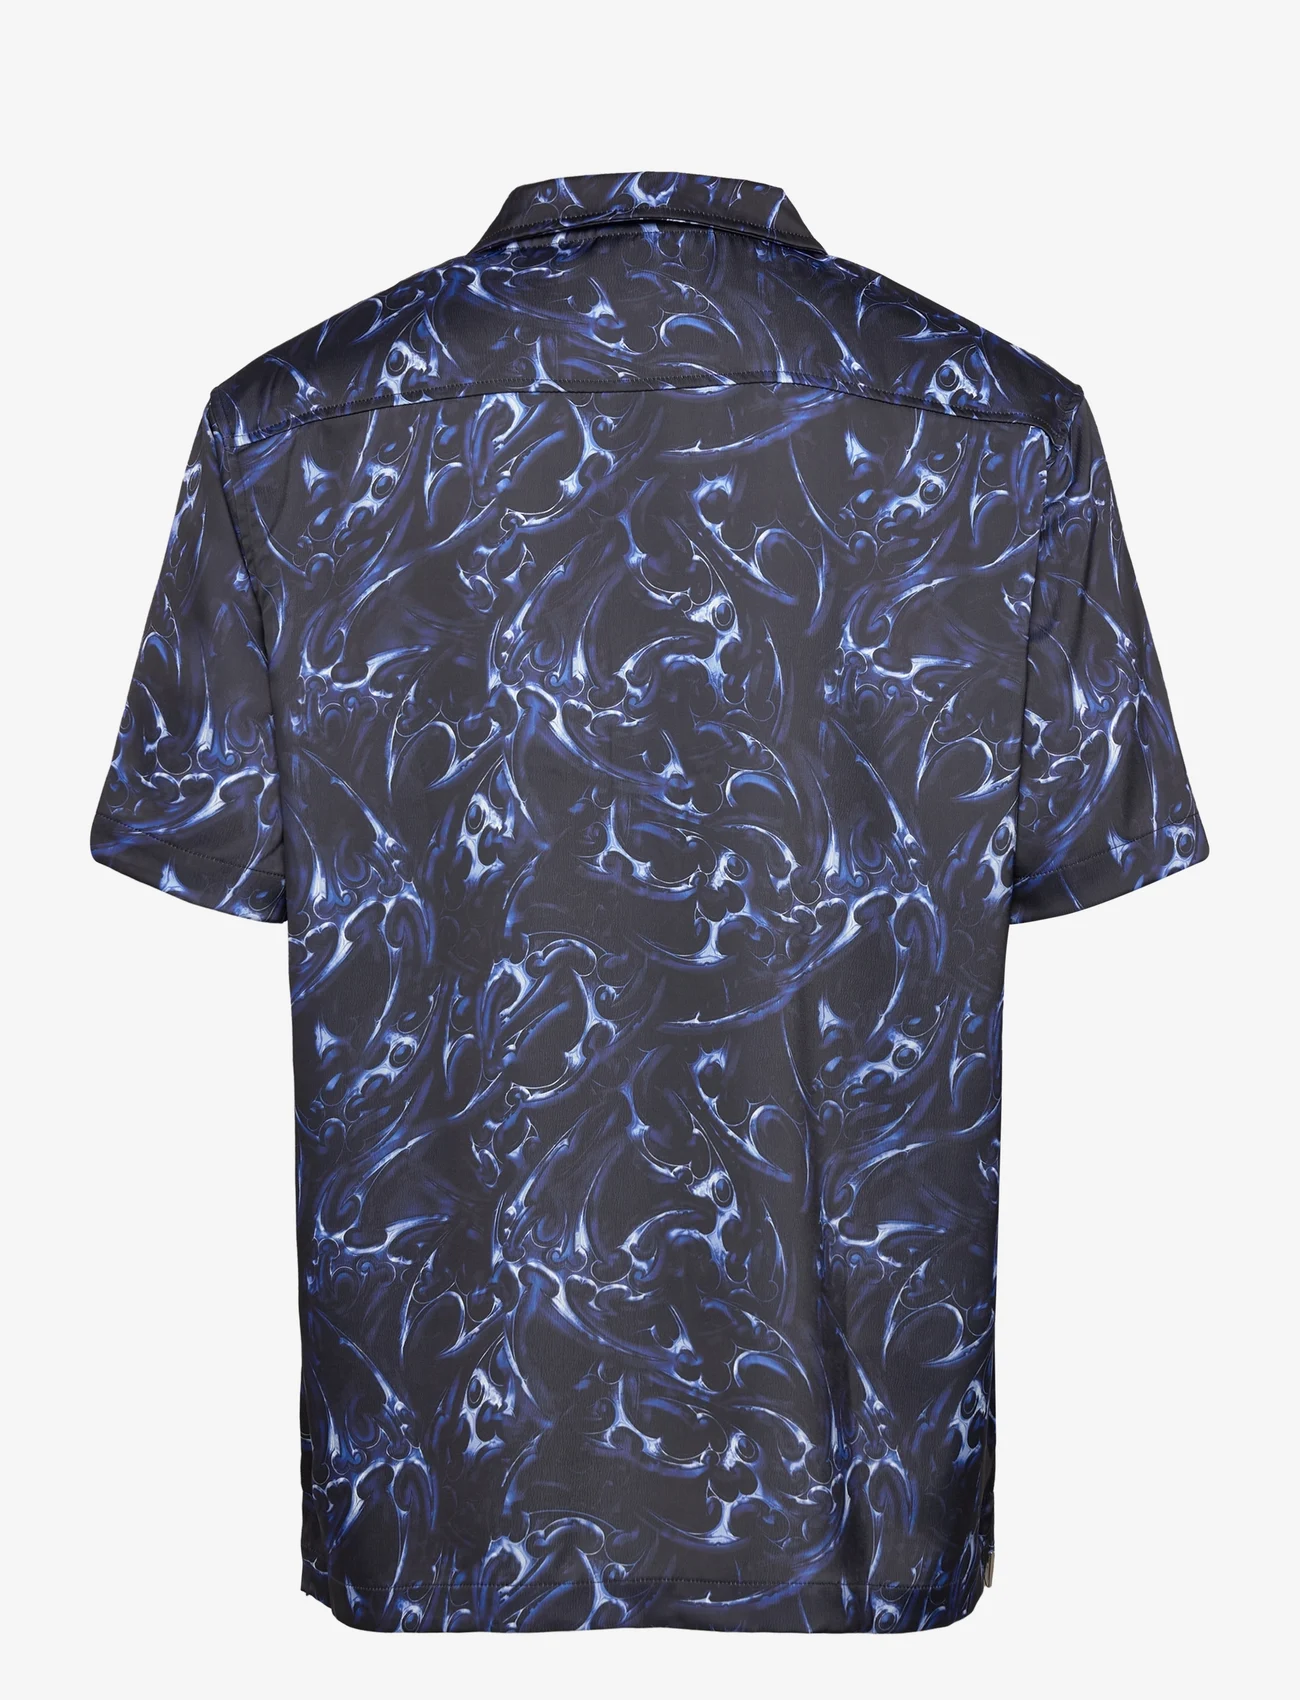 HAN Kjøbenhavn - Chrome Tribal Printed Summer Shirt - lyhythihaiset kauluspaidat - blue - 1